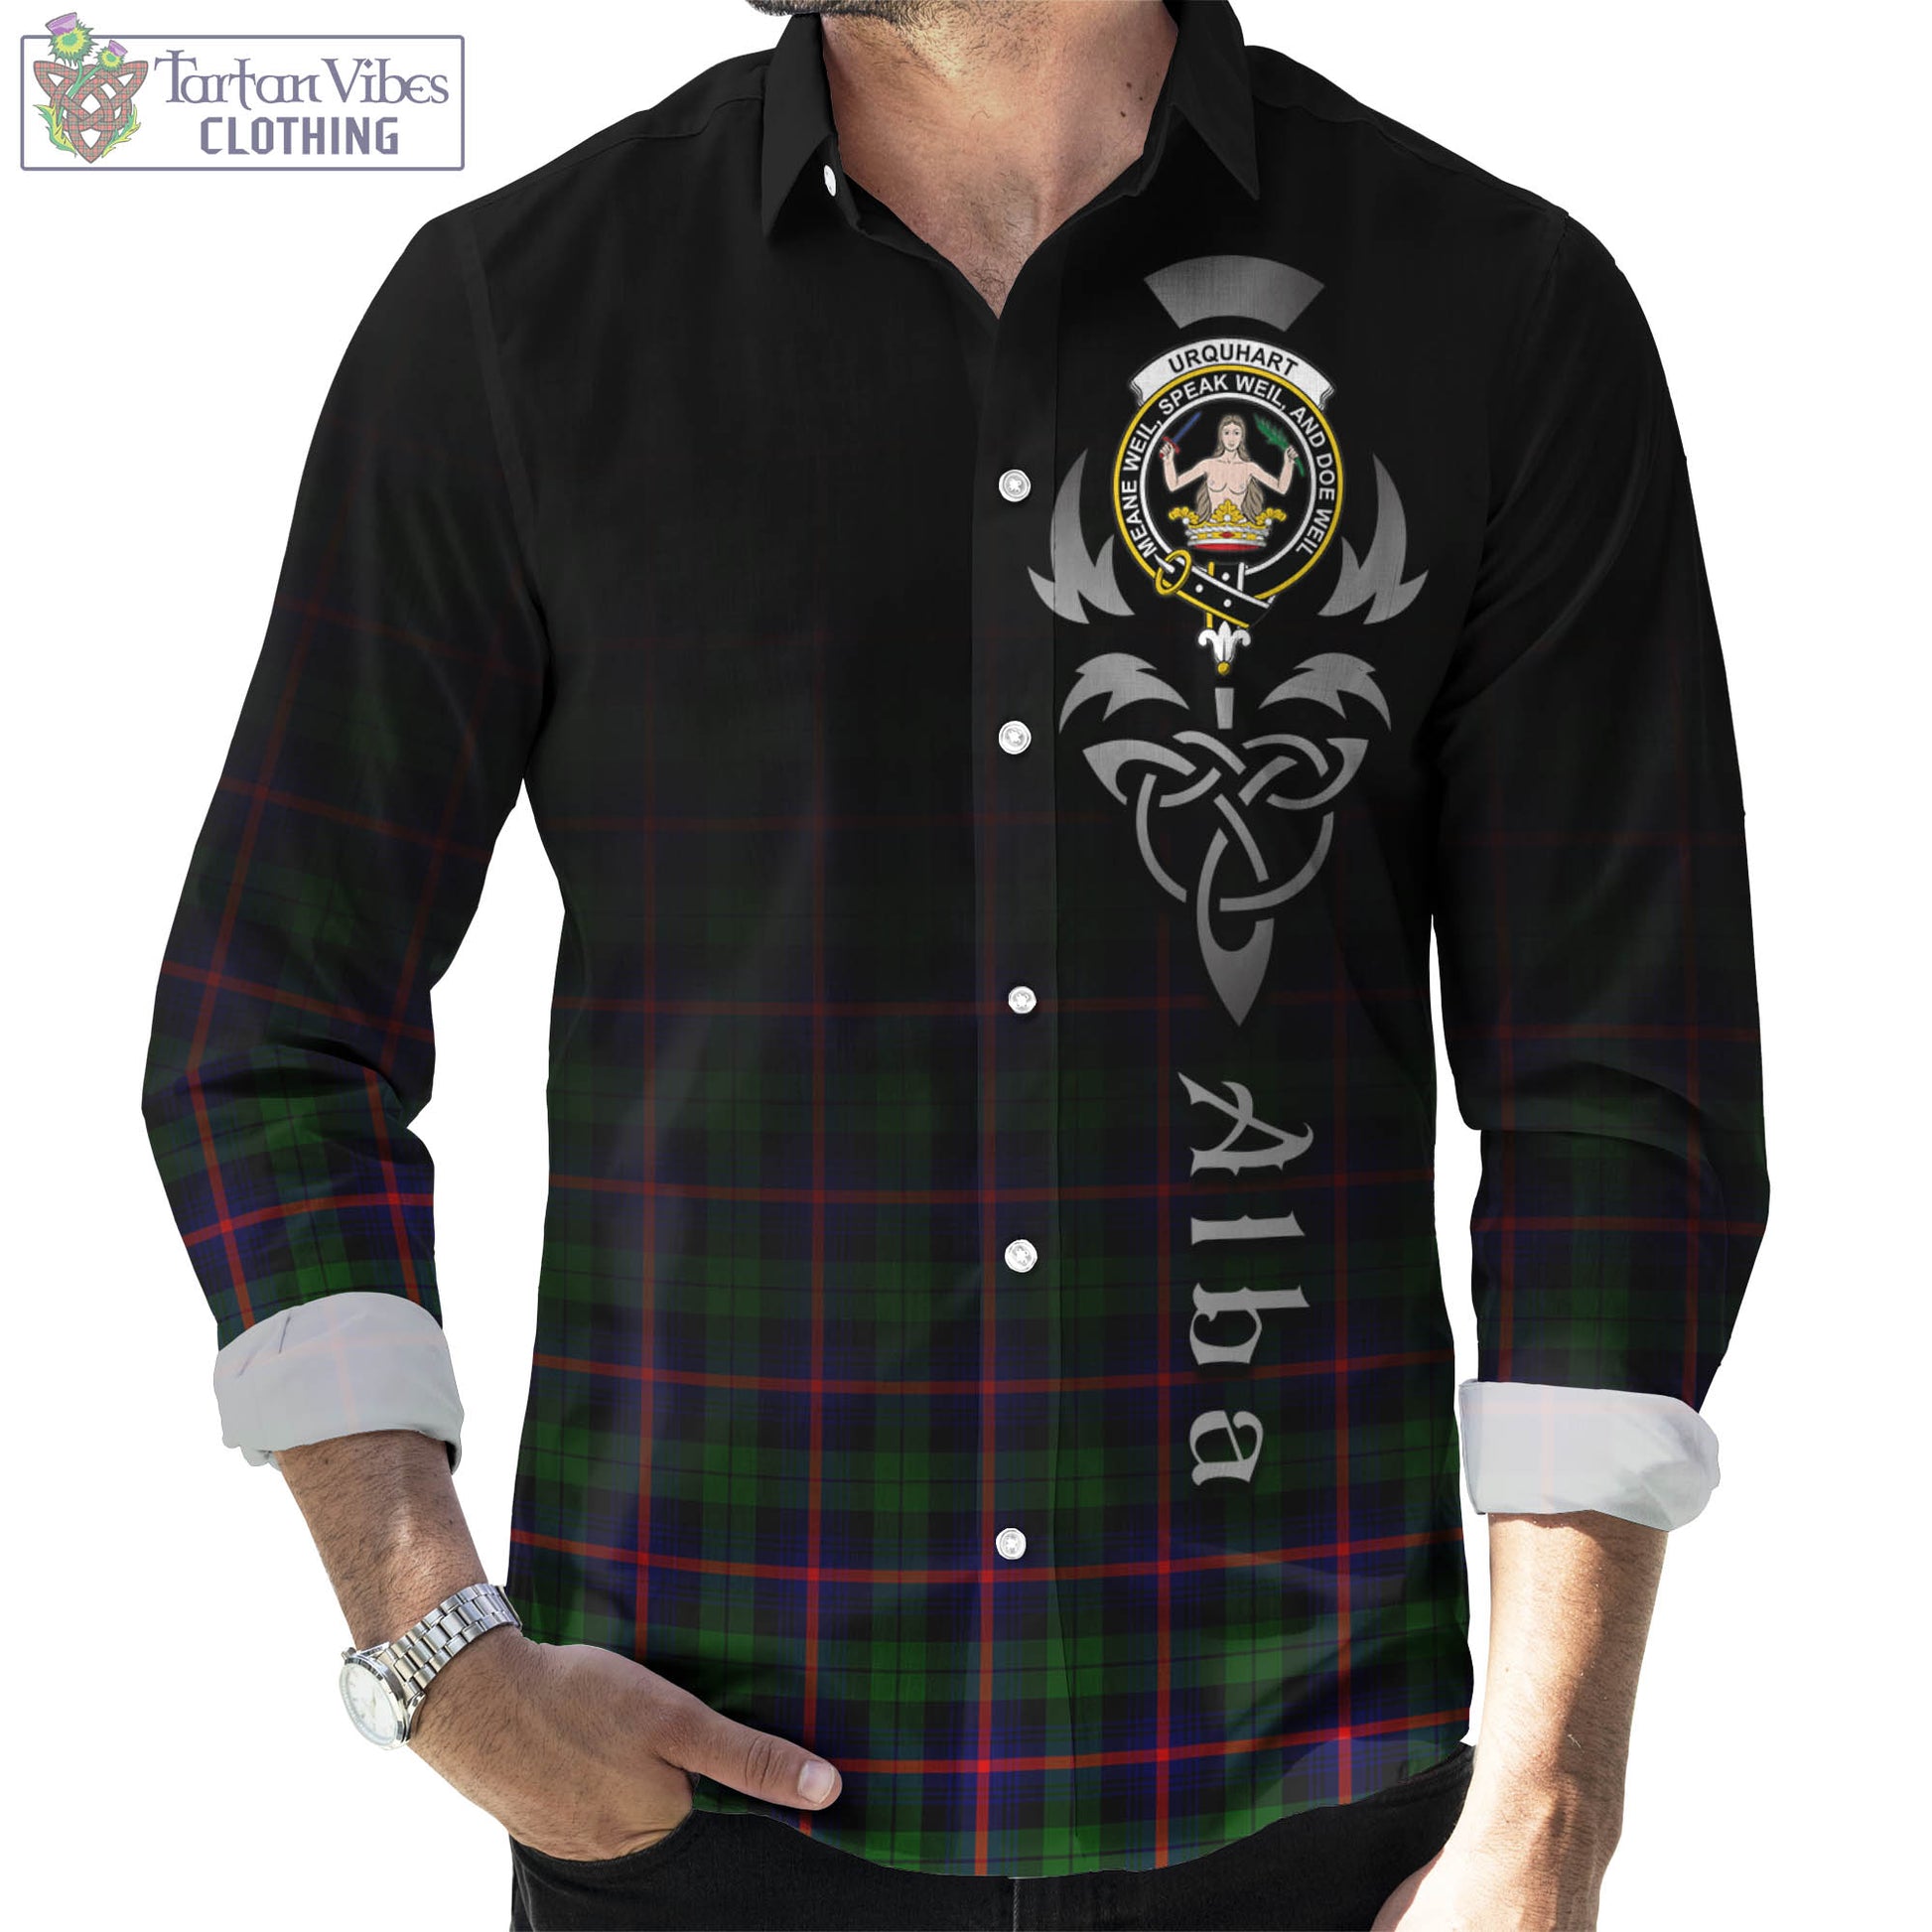 Tartan Vibes Clothing Urquhart Modern Tartan Long Sleeve Button Up Featuring Alba Gu Brath Family Crest Celtic Inspired